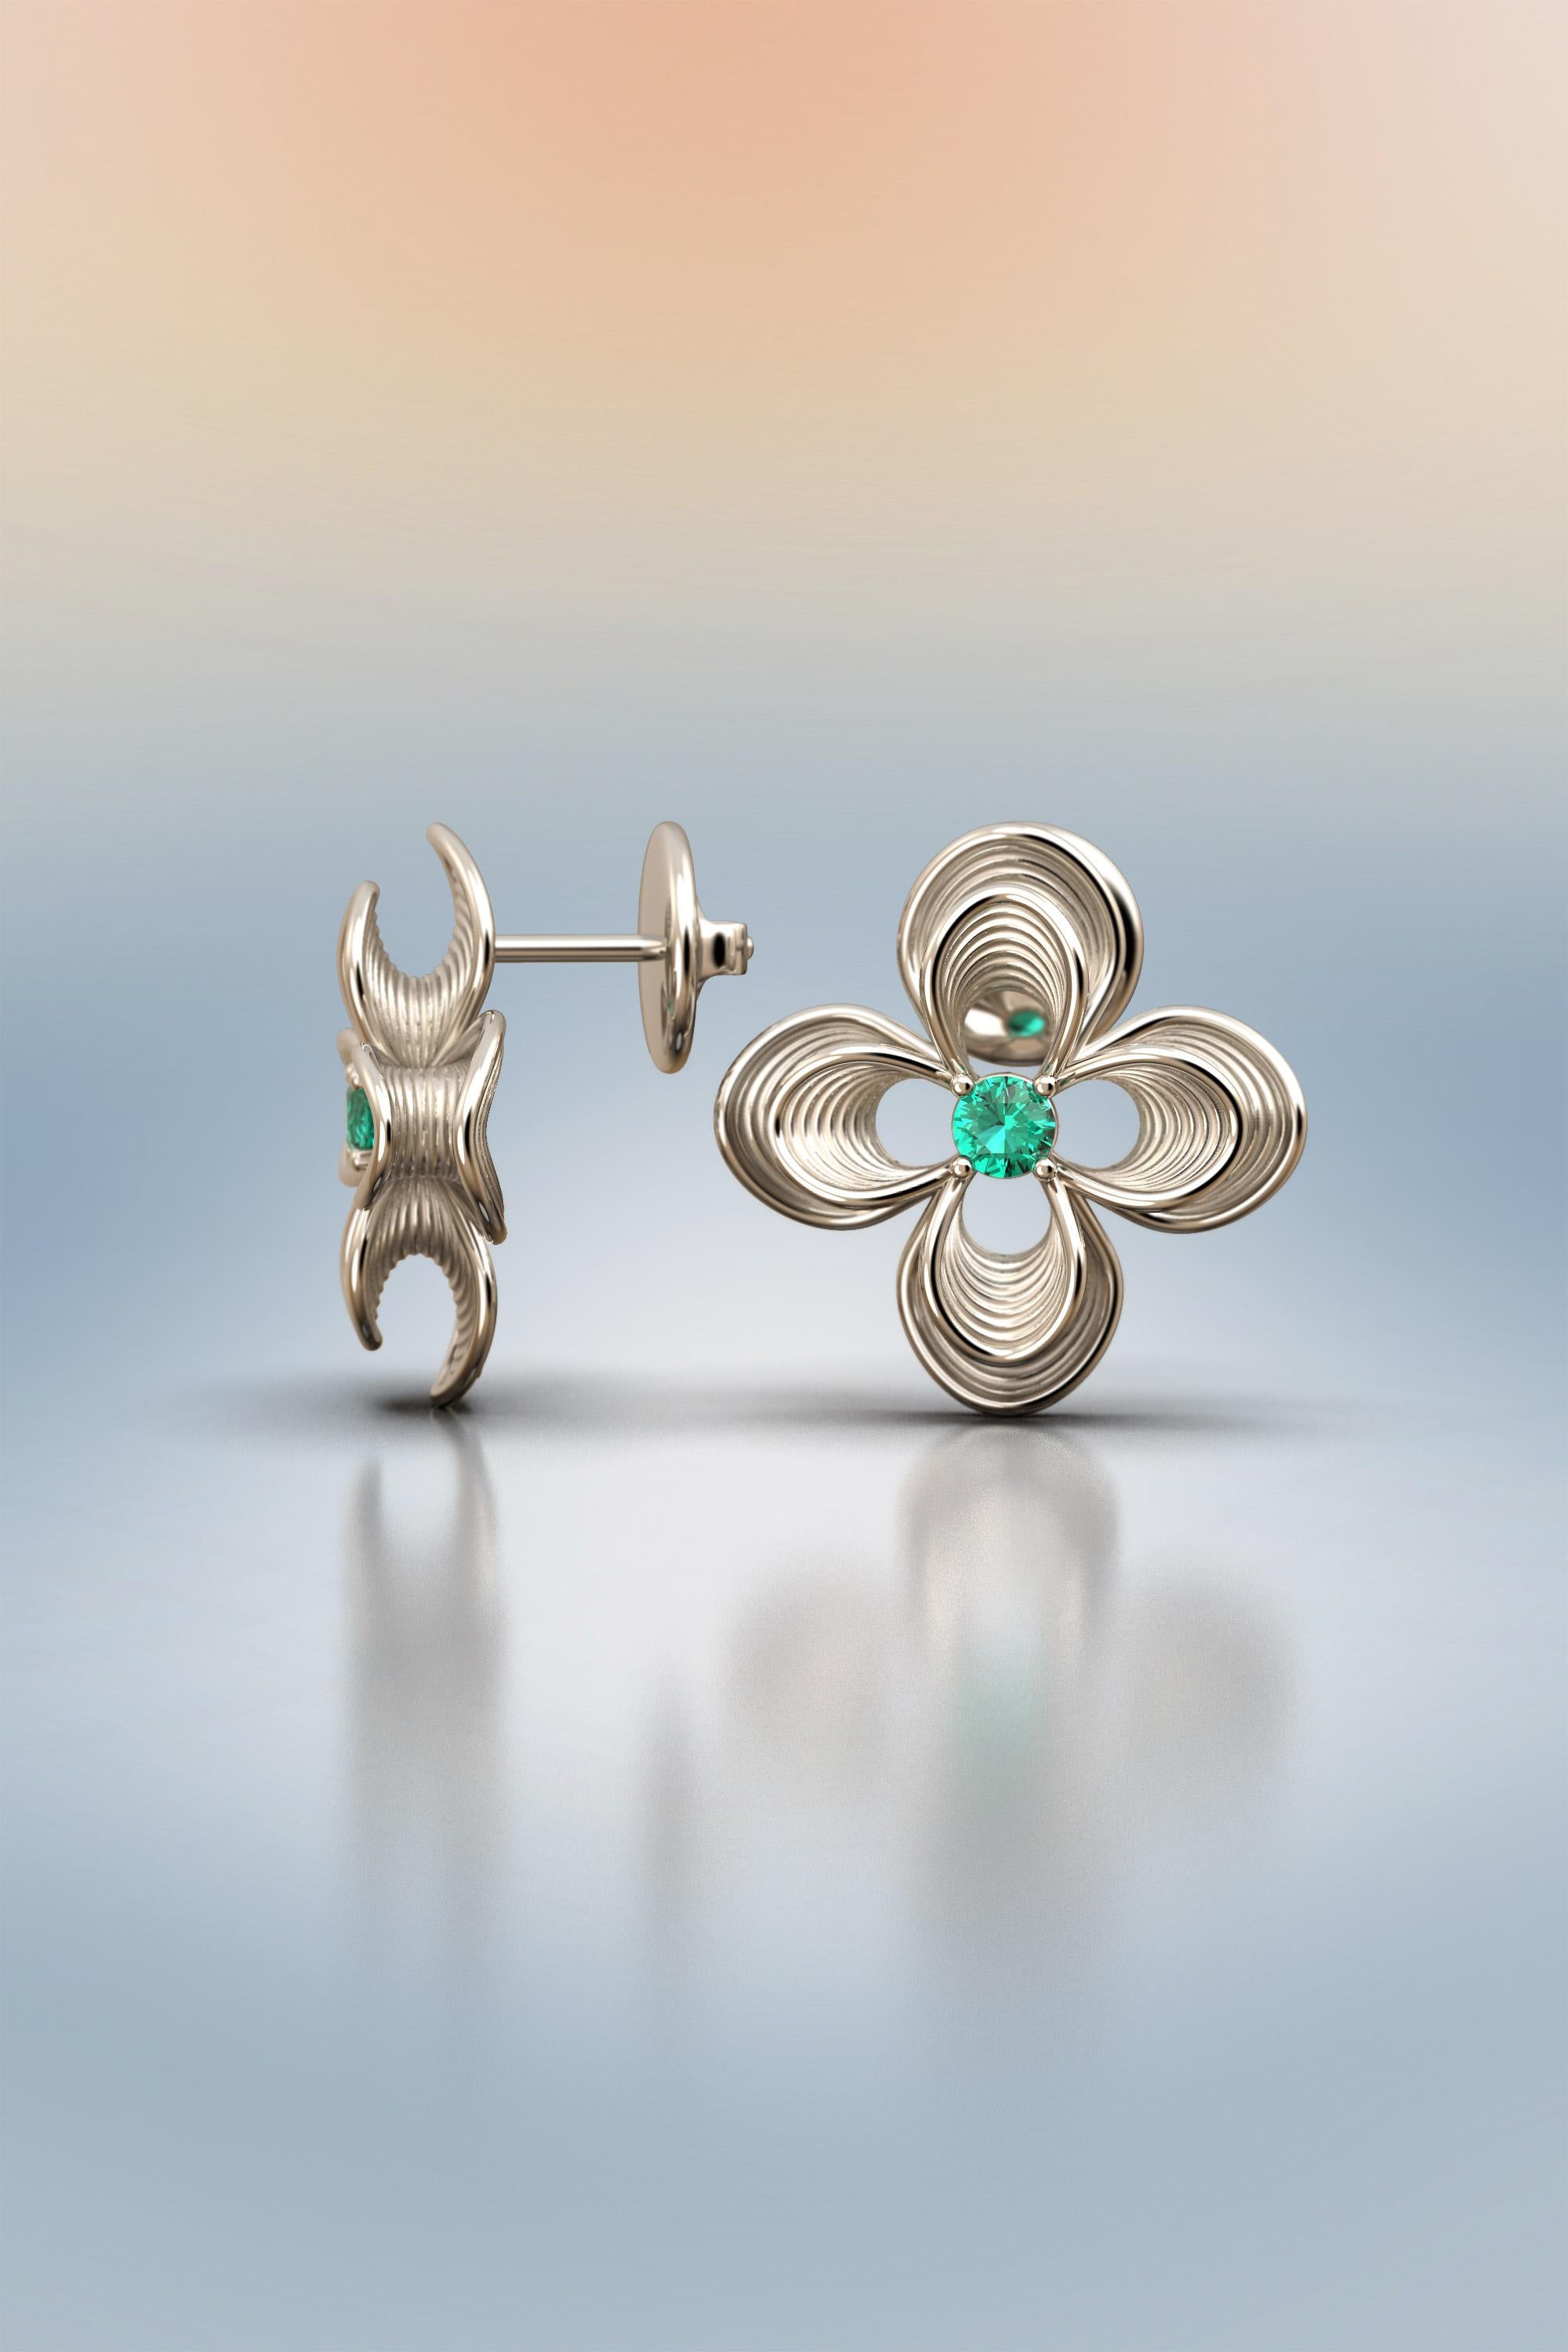 Emerald Stud Earrings in 18k Italian Gold by Oltremare Gioielli For Sale 5